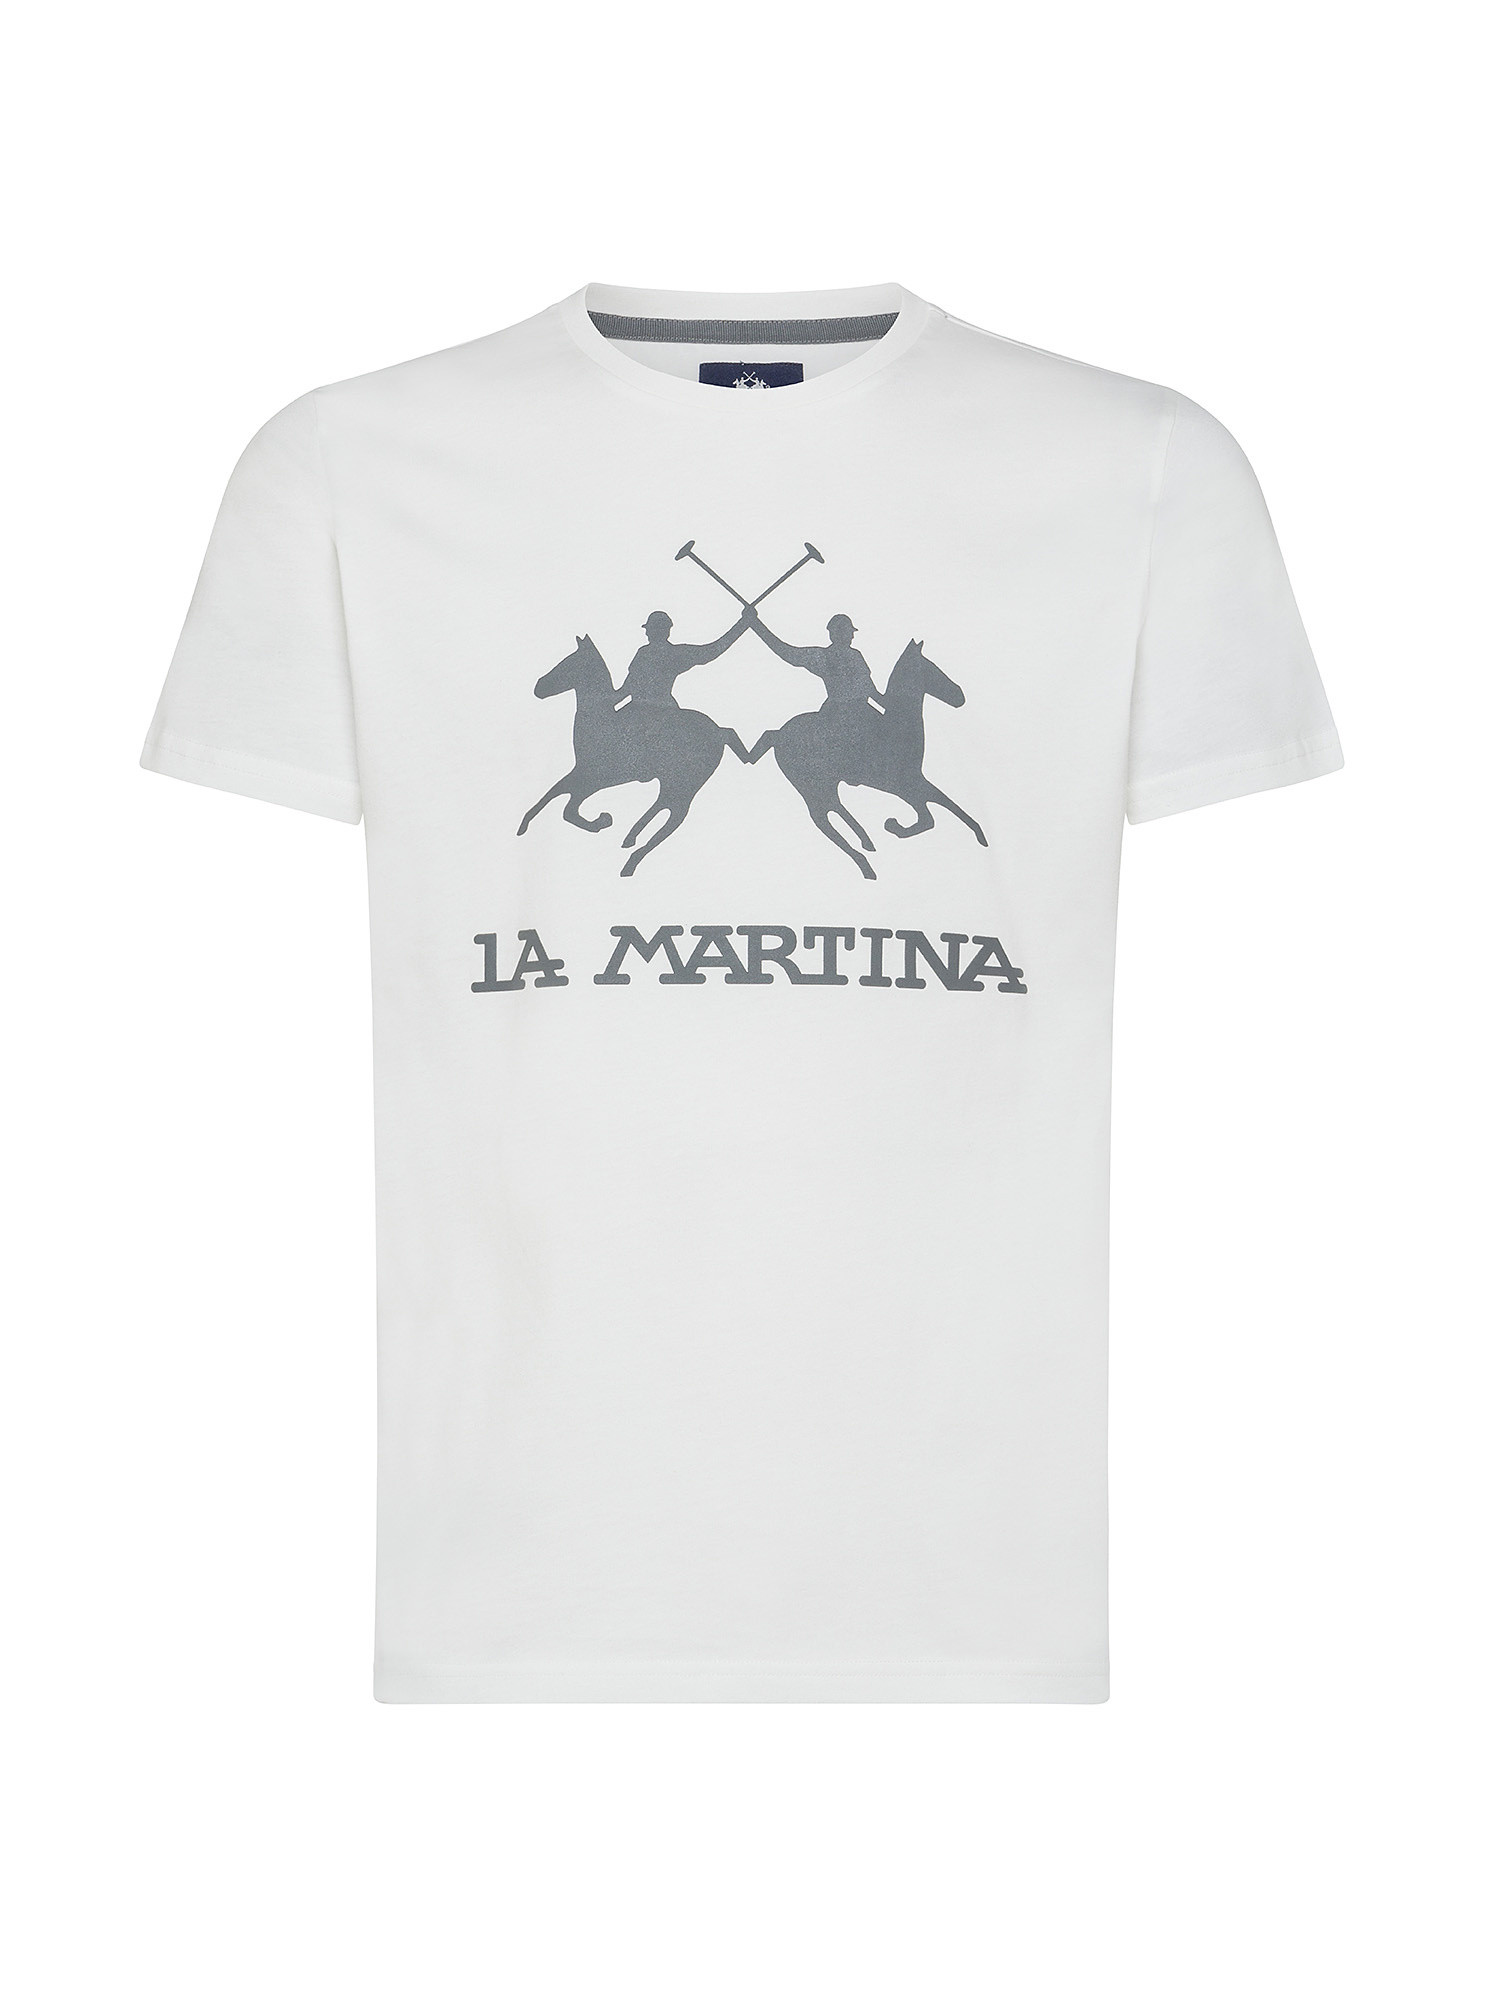 La Martina - Regular fit cotton T-shirt, White, large image number 0